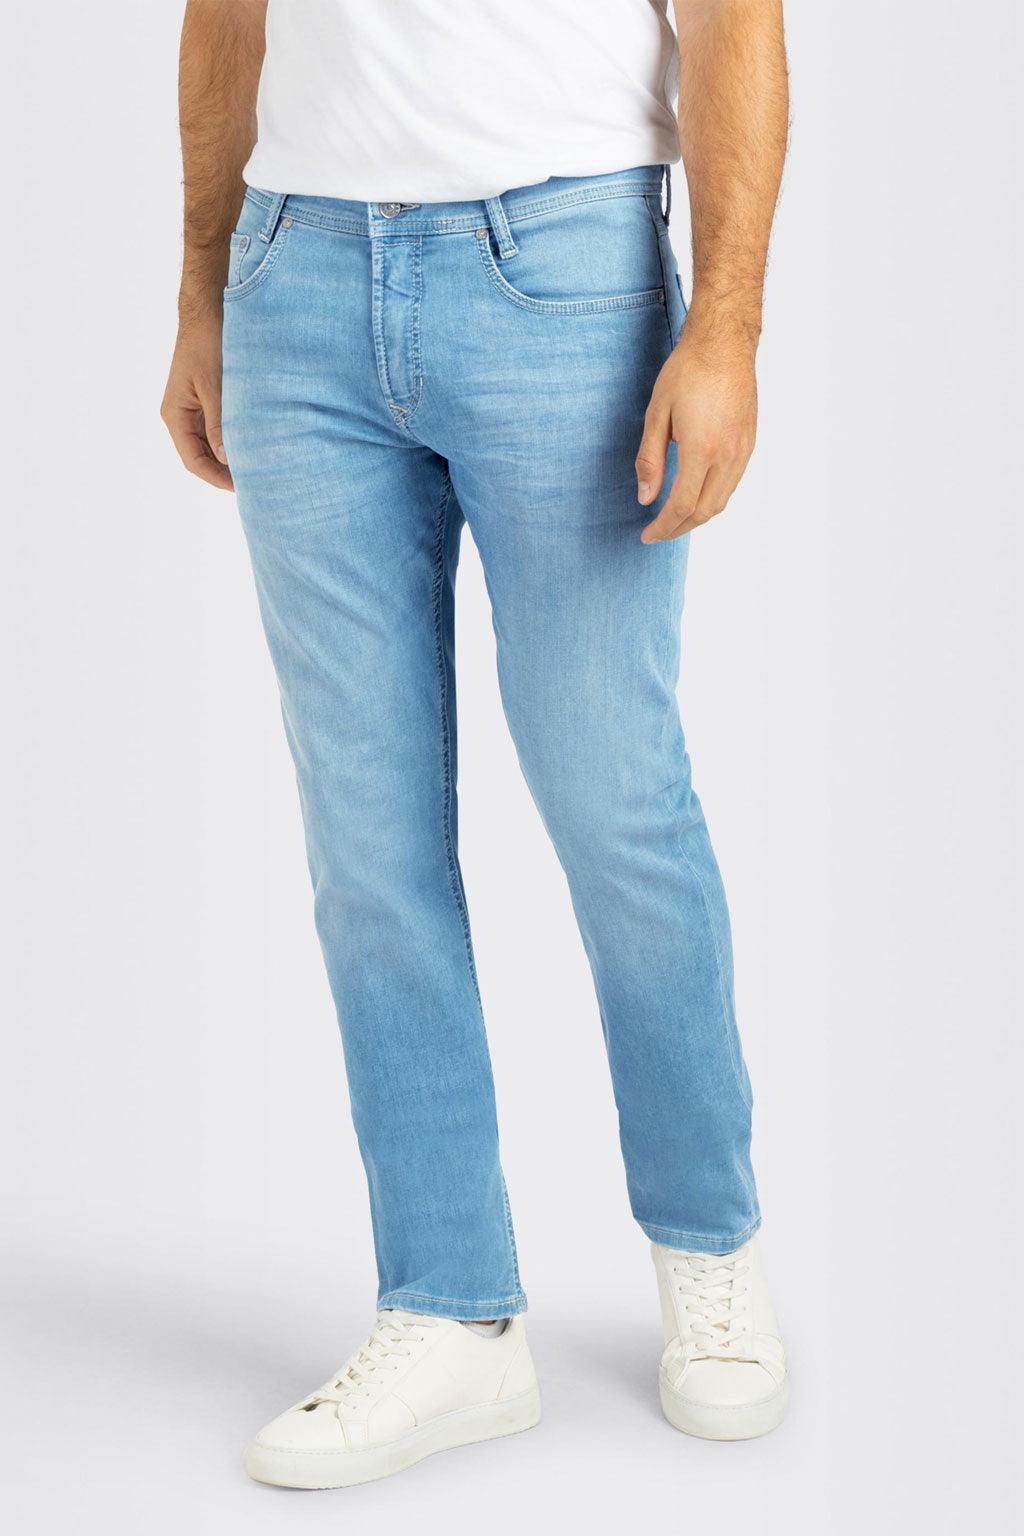 MAC jeans - Big Boss | the menswear concept